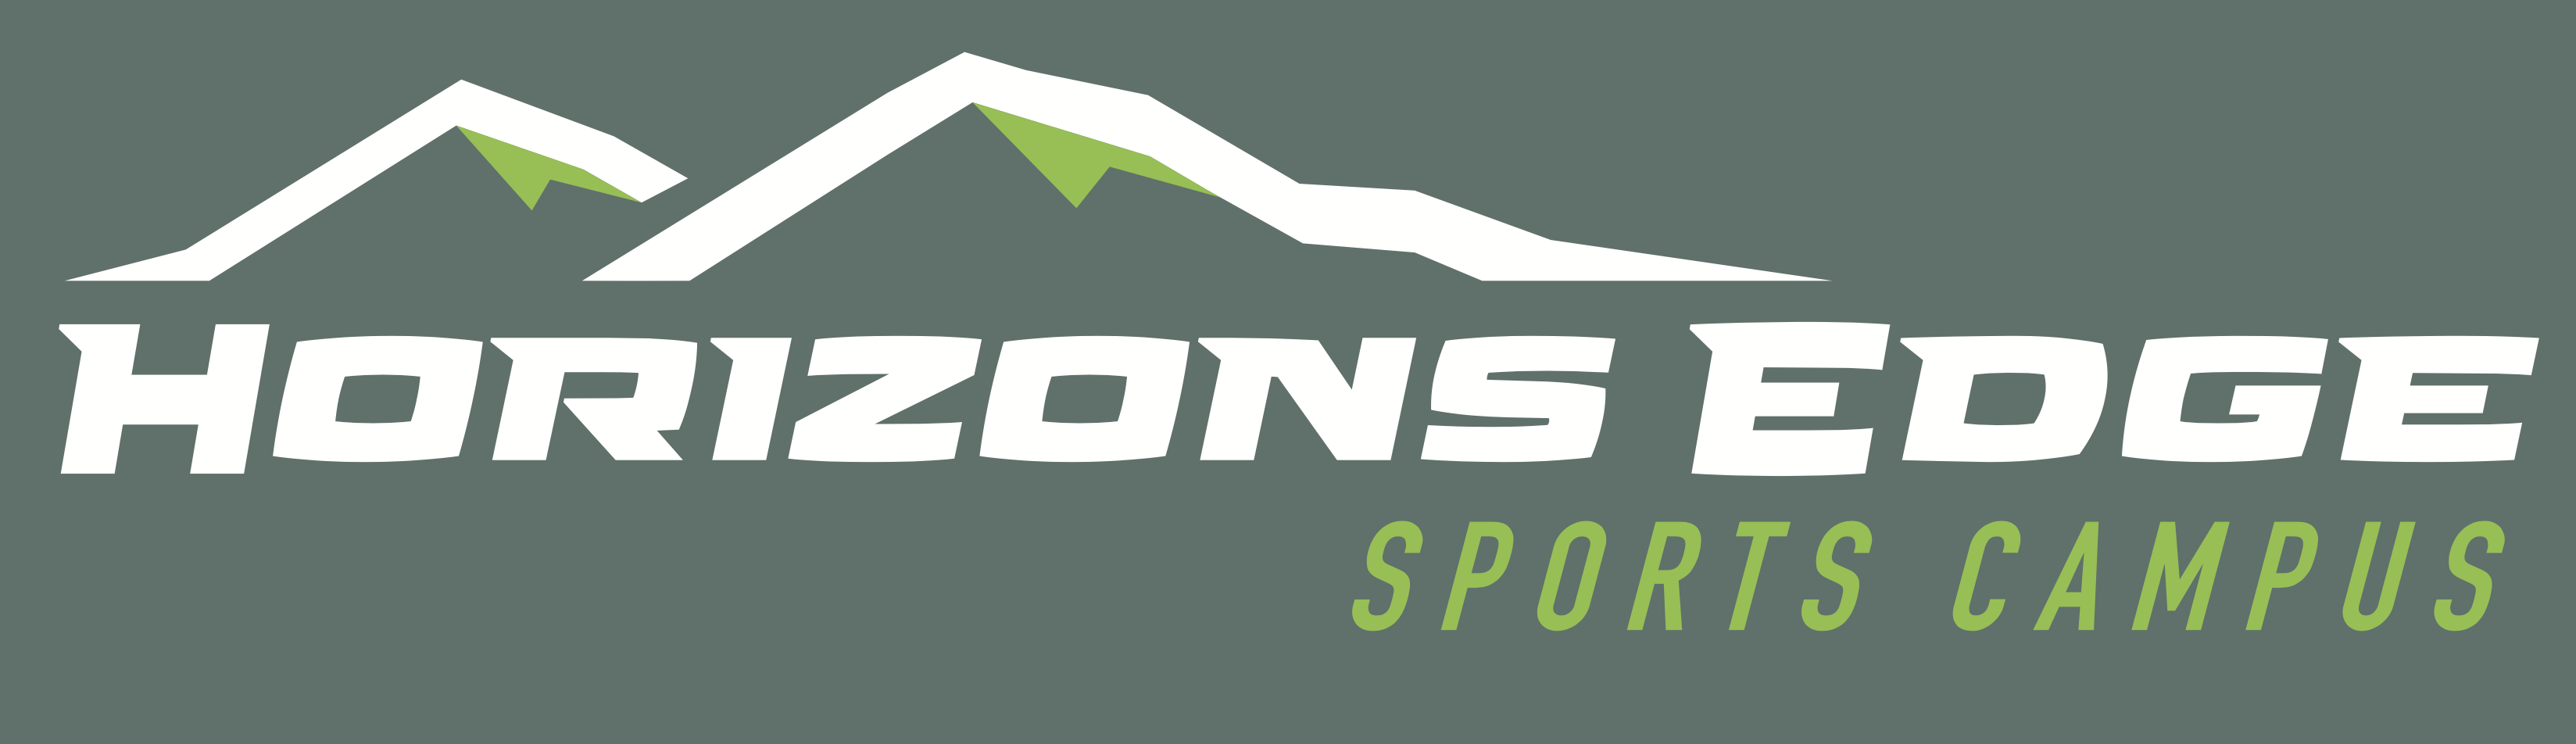 Horizons Edge Sports Campus Logo